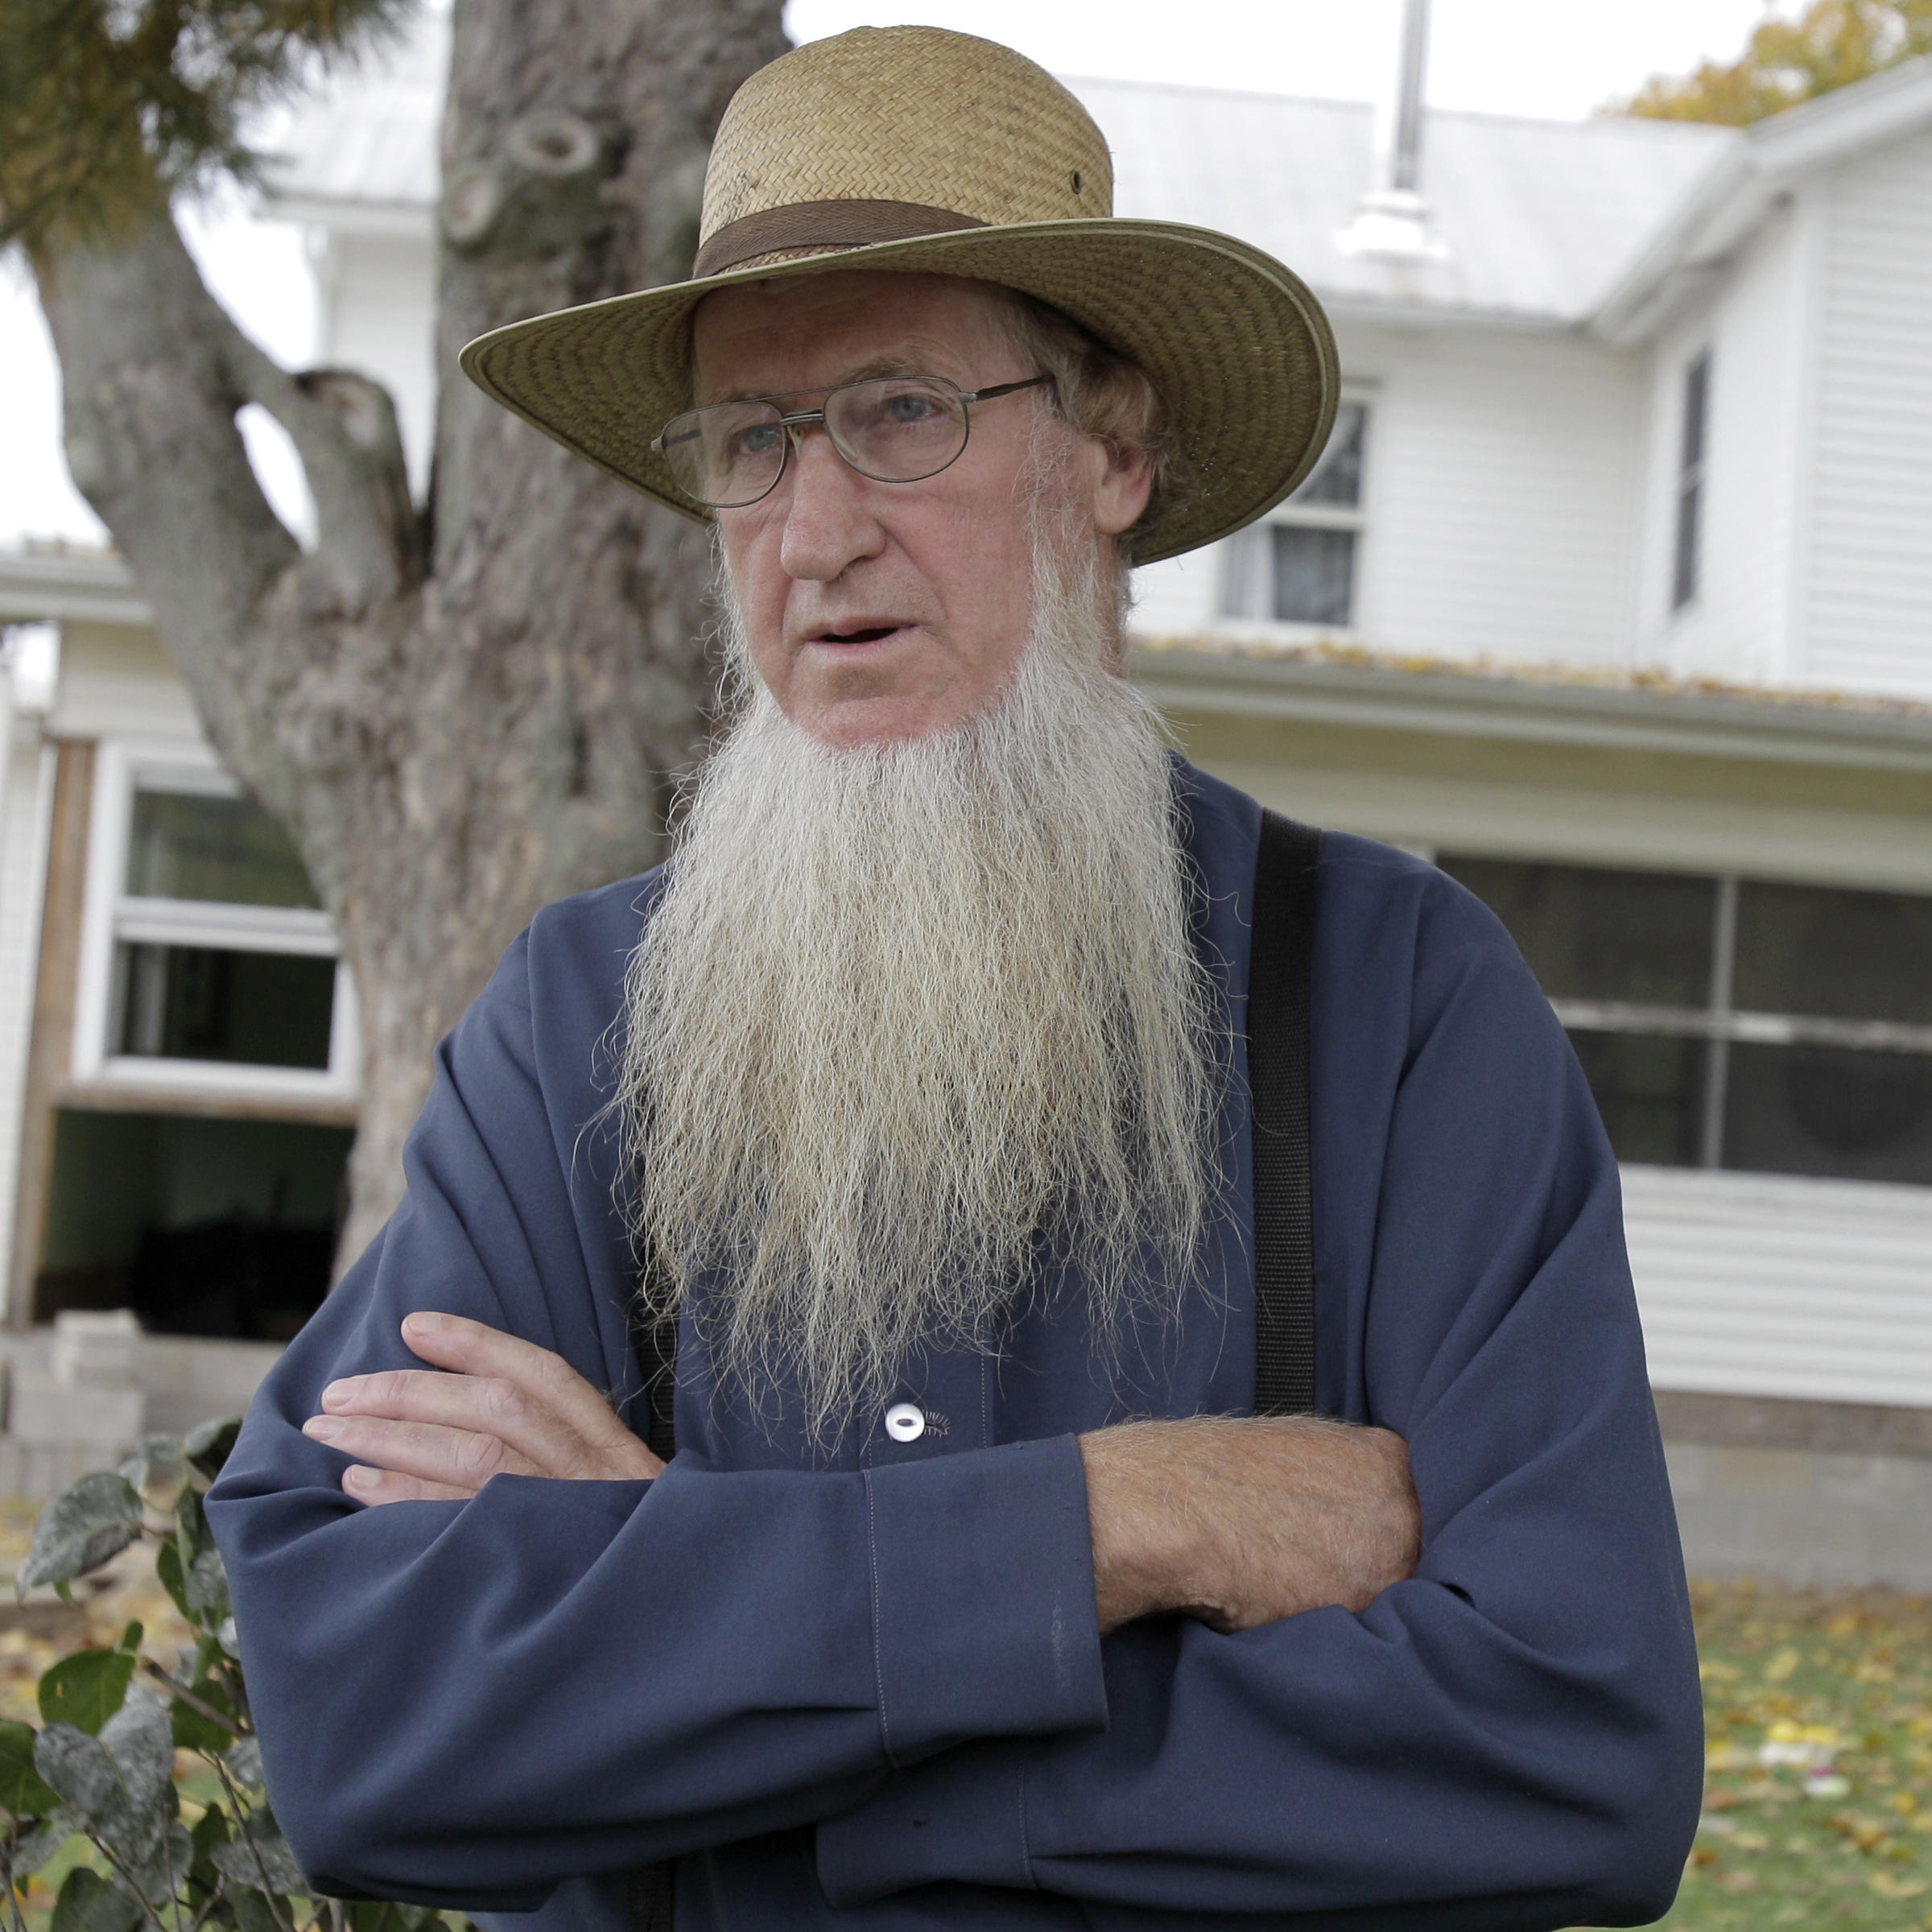 Judge May Not Cut Amish Hair Shearing Culprits A Break Wjct News